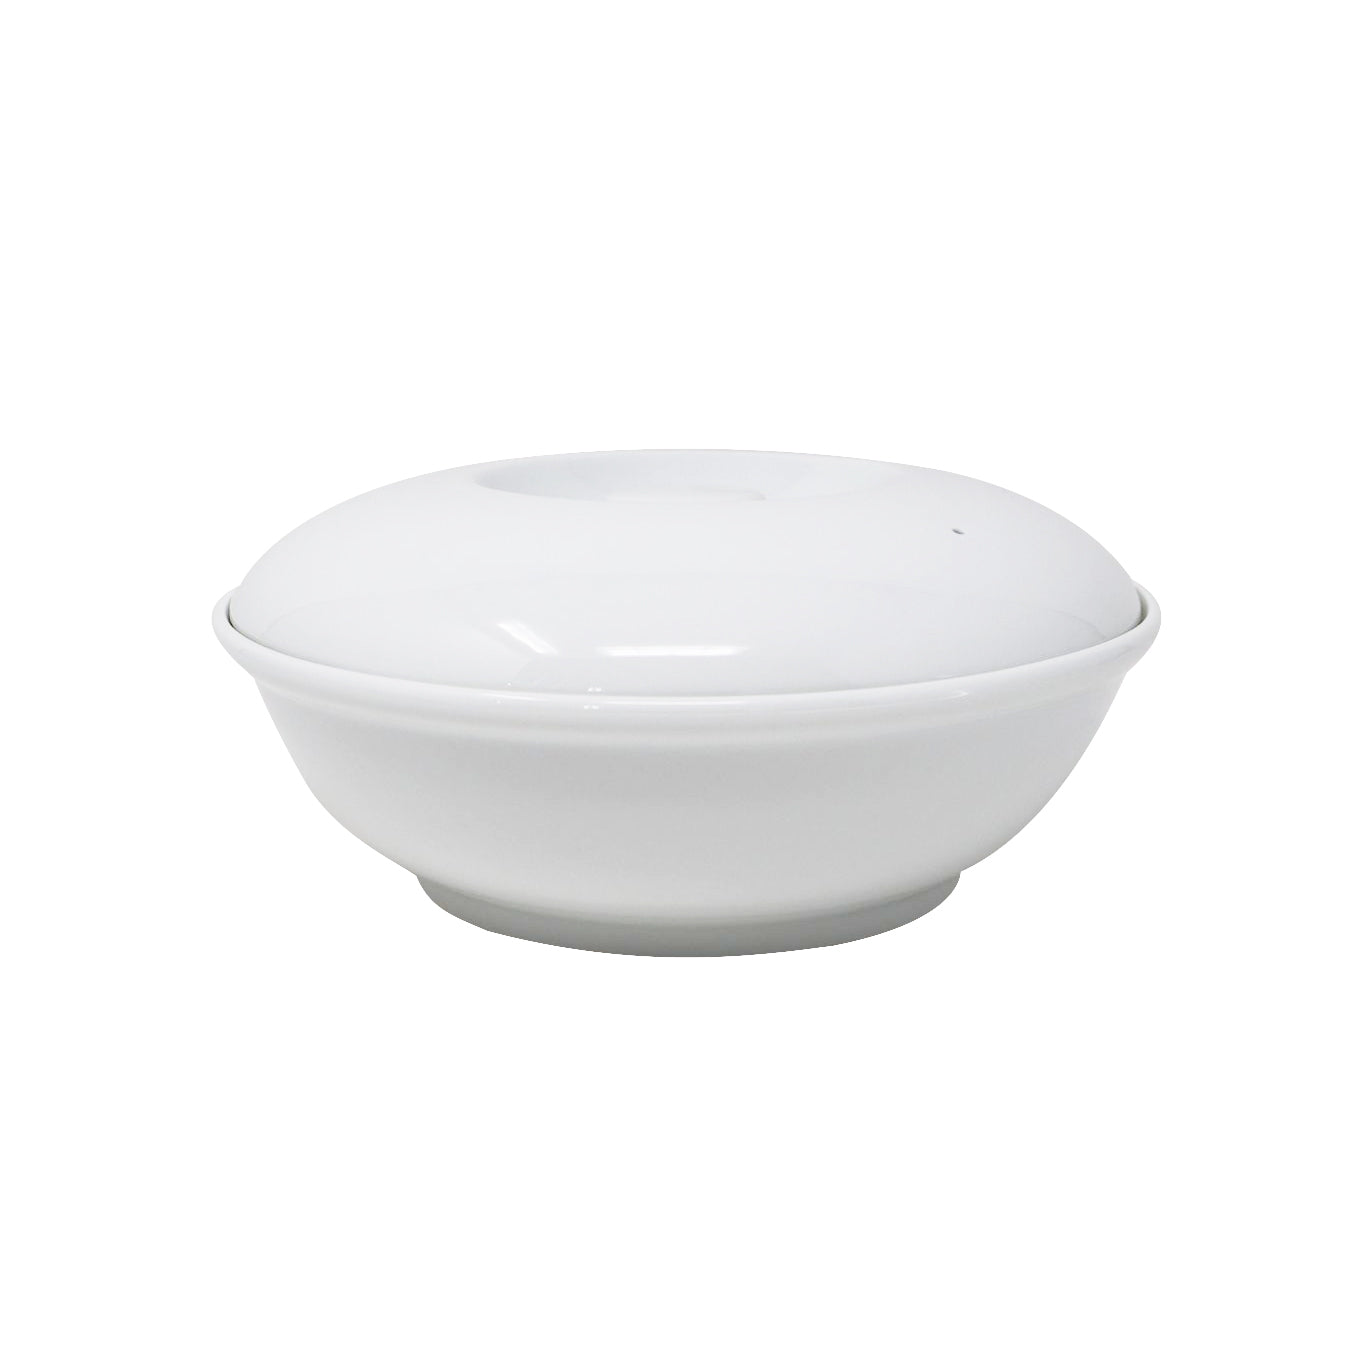 Noritake Lifestyle White Covered Serving Bowl 1.9L